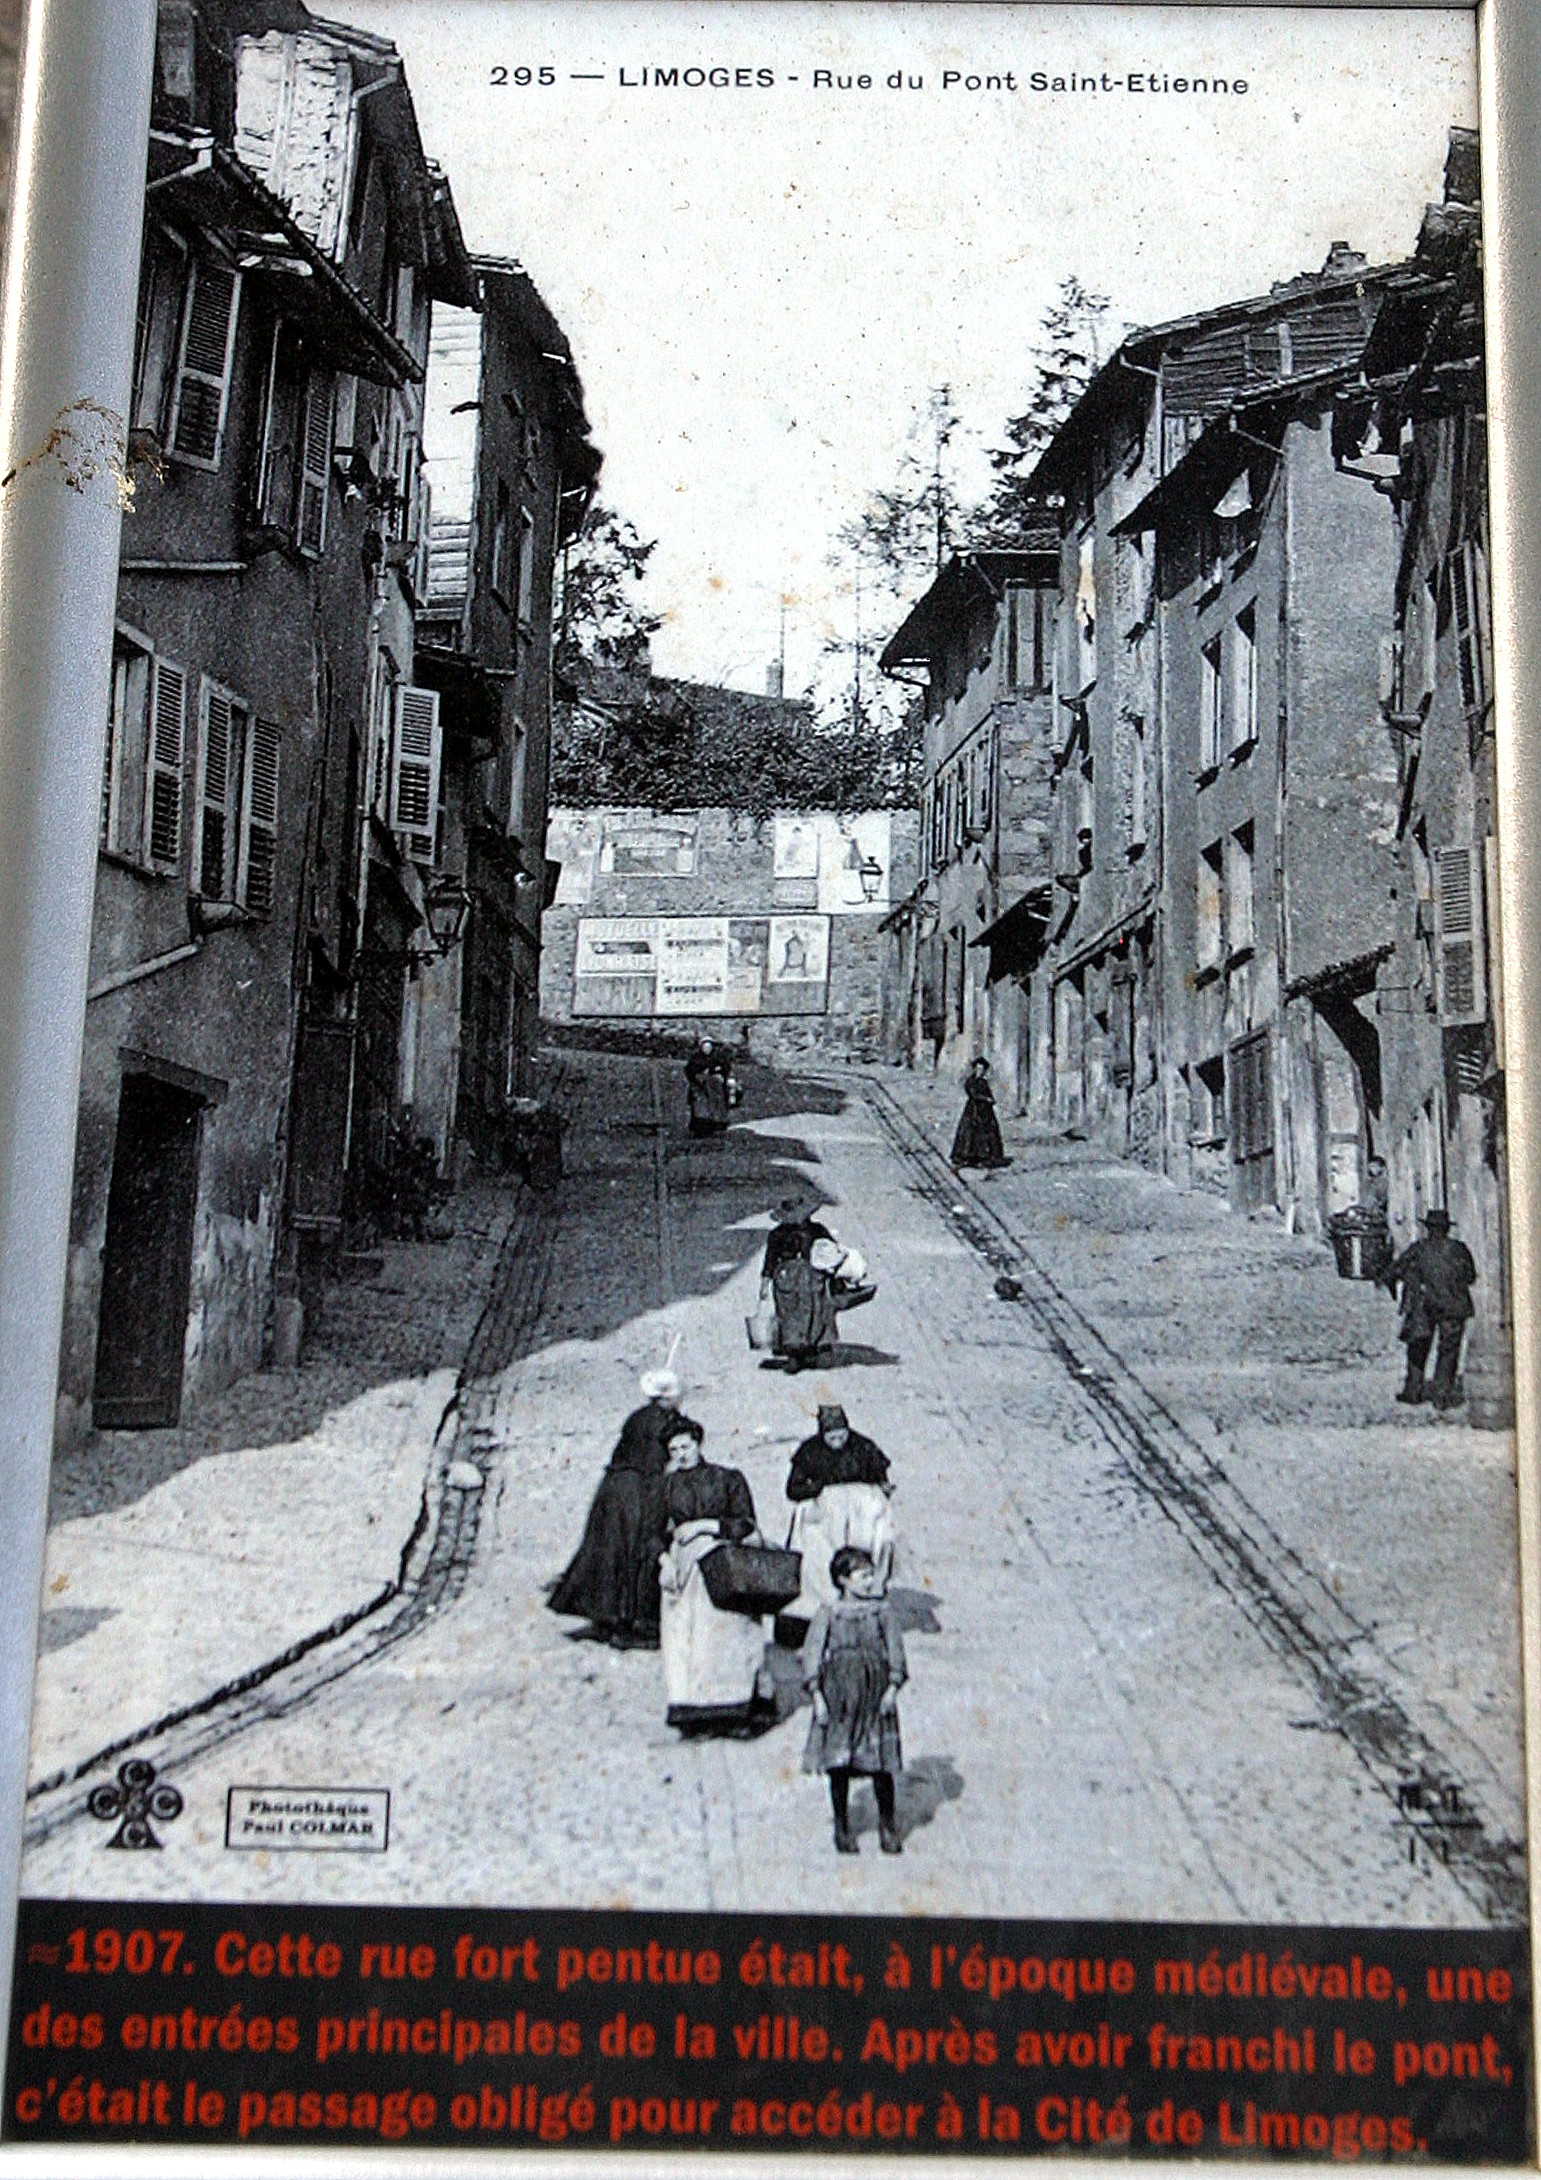 Limoges, France - Rue du Pont Saint-Etienne 1907